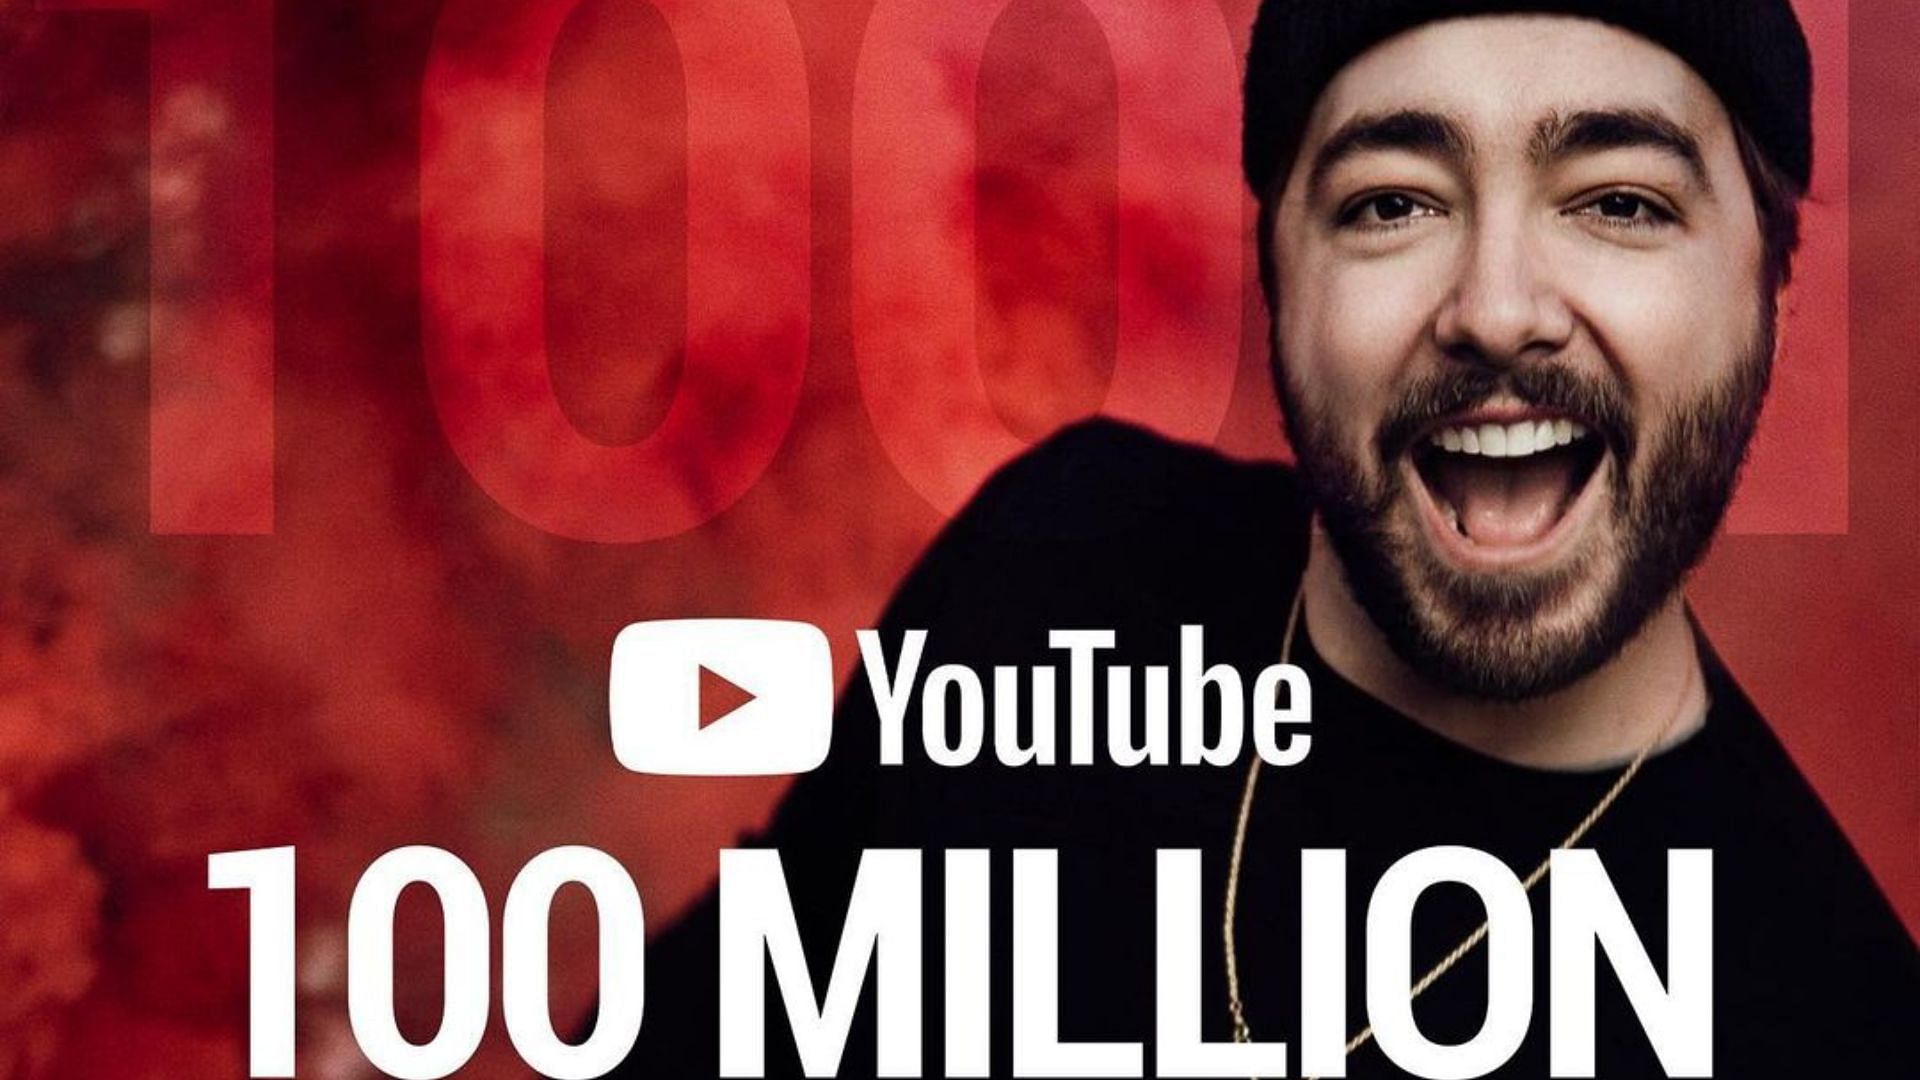 Dan James Rodo garnered 100 million views on YouTube.